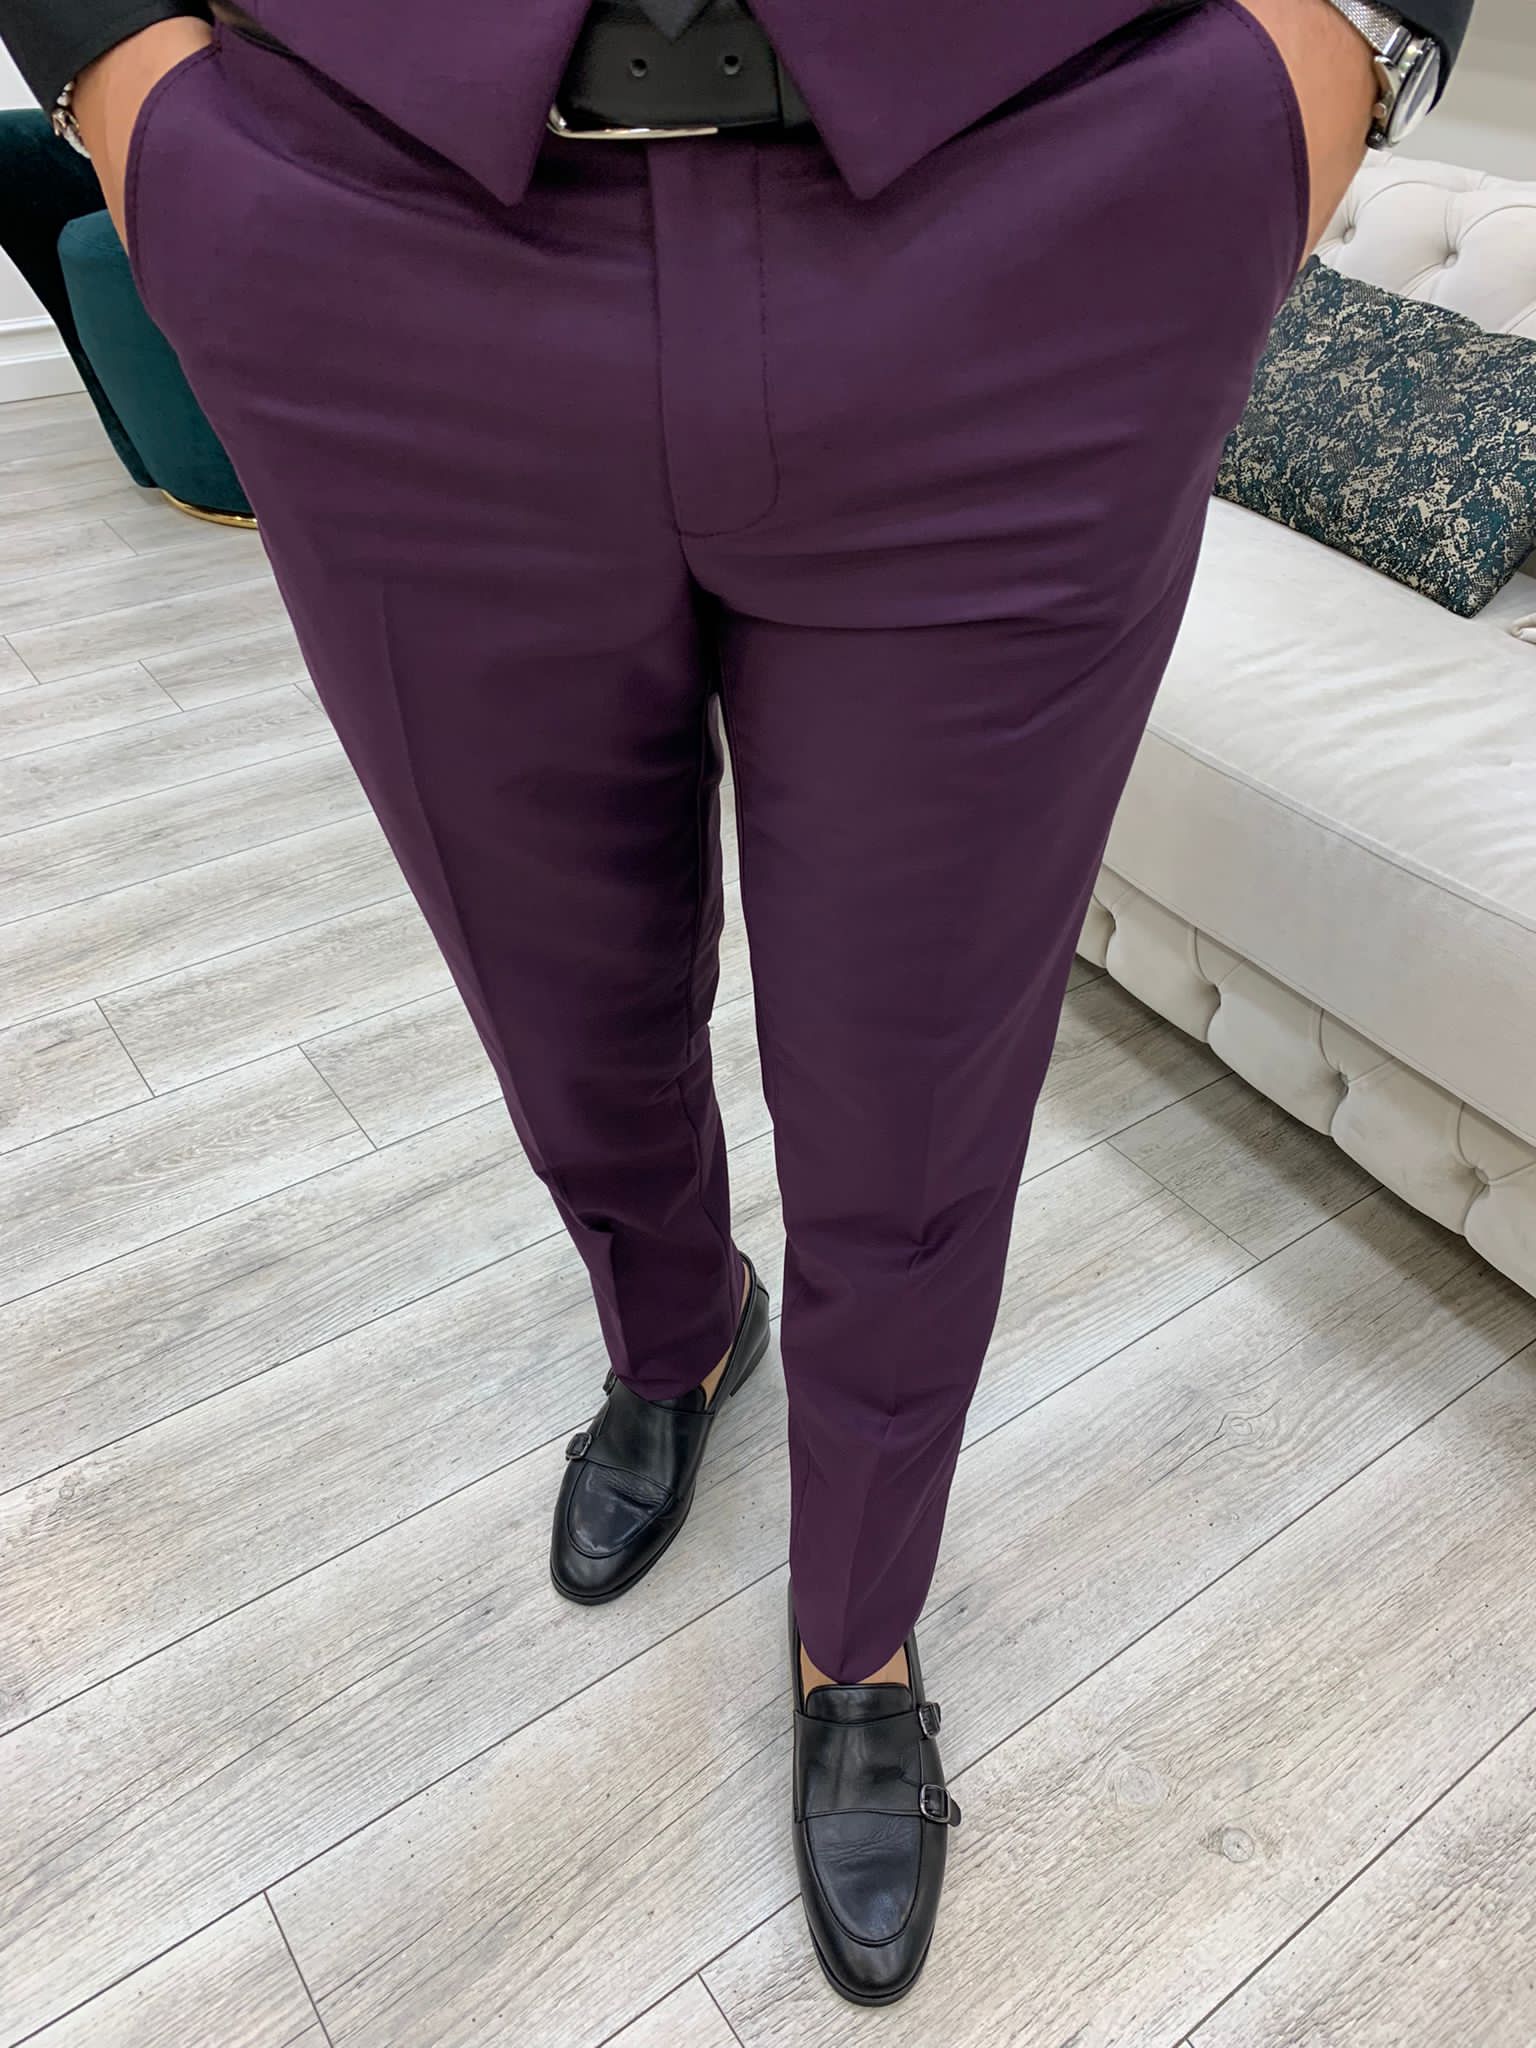 Rio Grande Purple Suit - Hollo Men